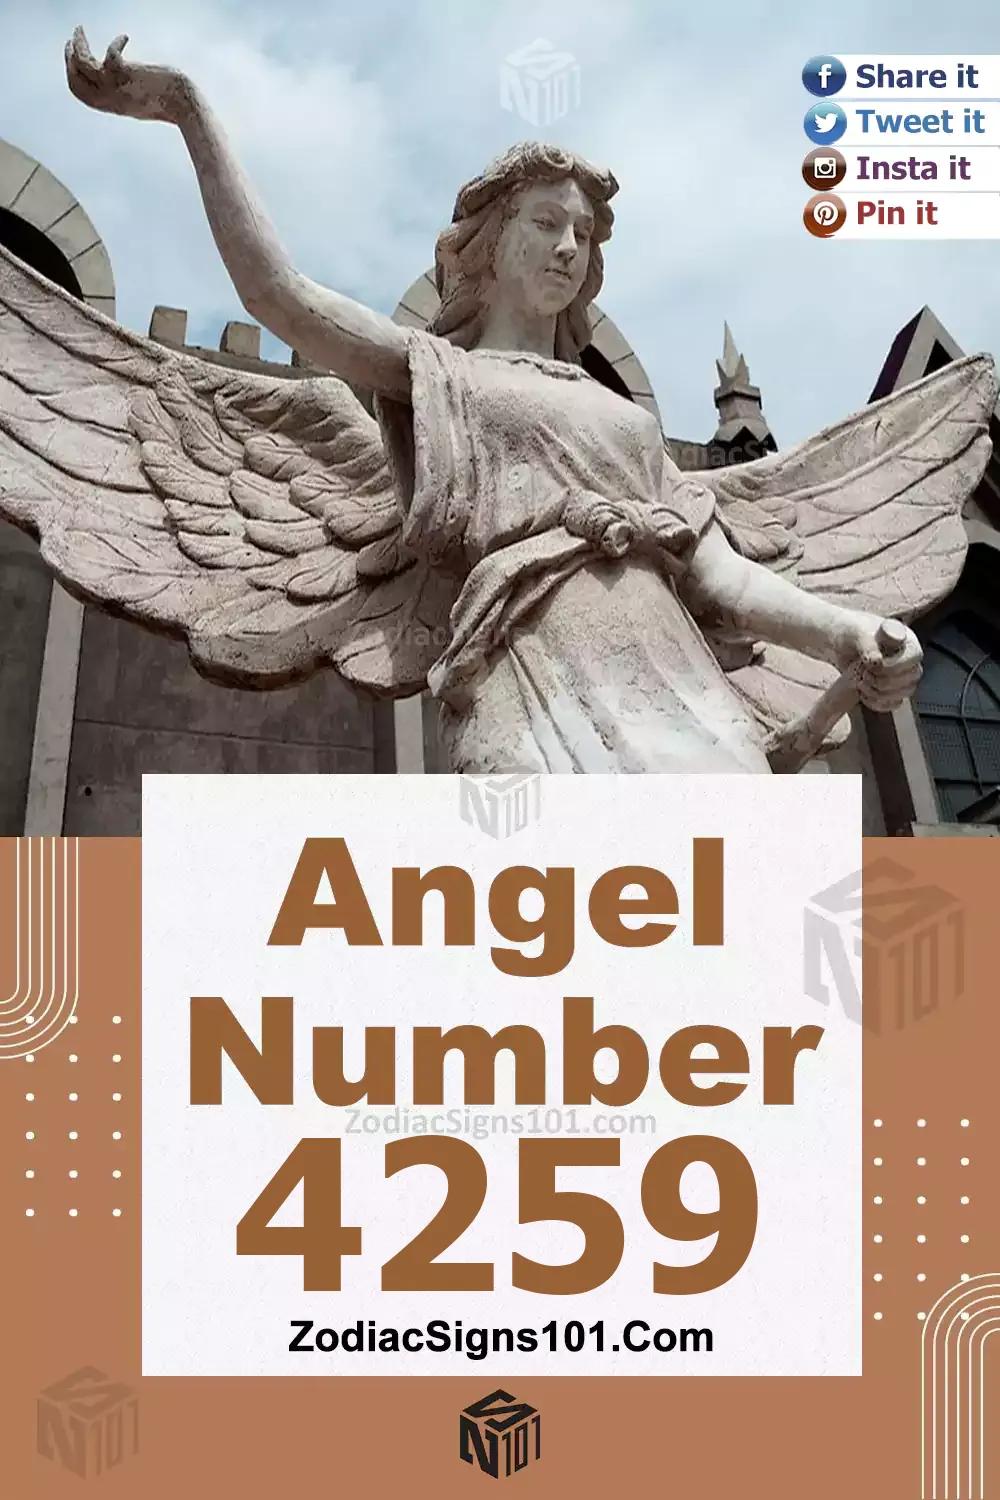 4259-Angel-Number-Meaning.jpg